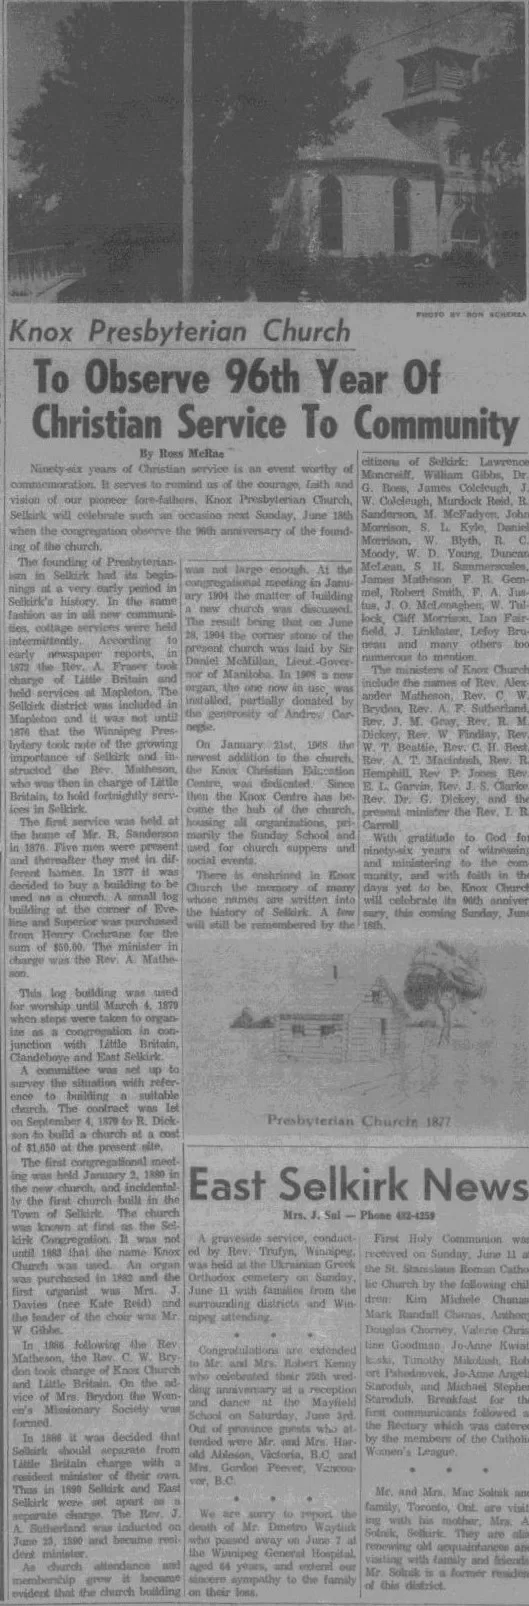 Newspaper Article on Knox Presbyterian Church